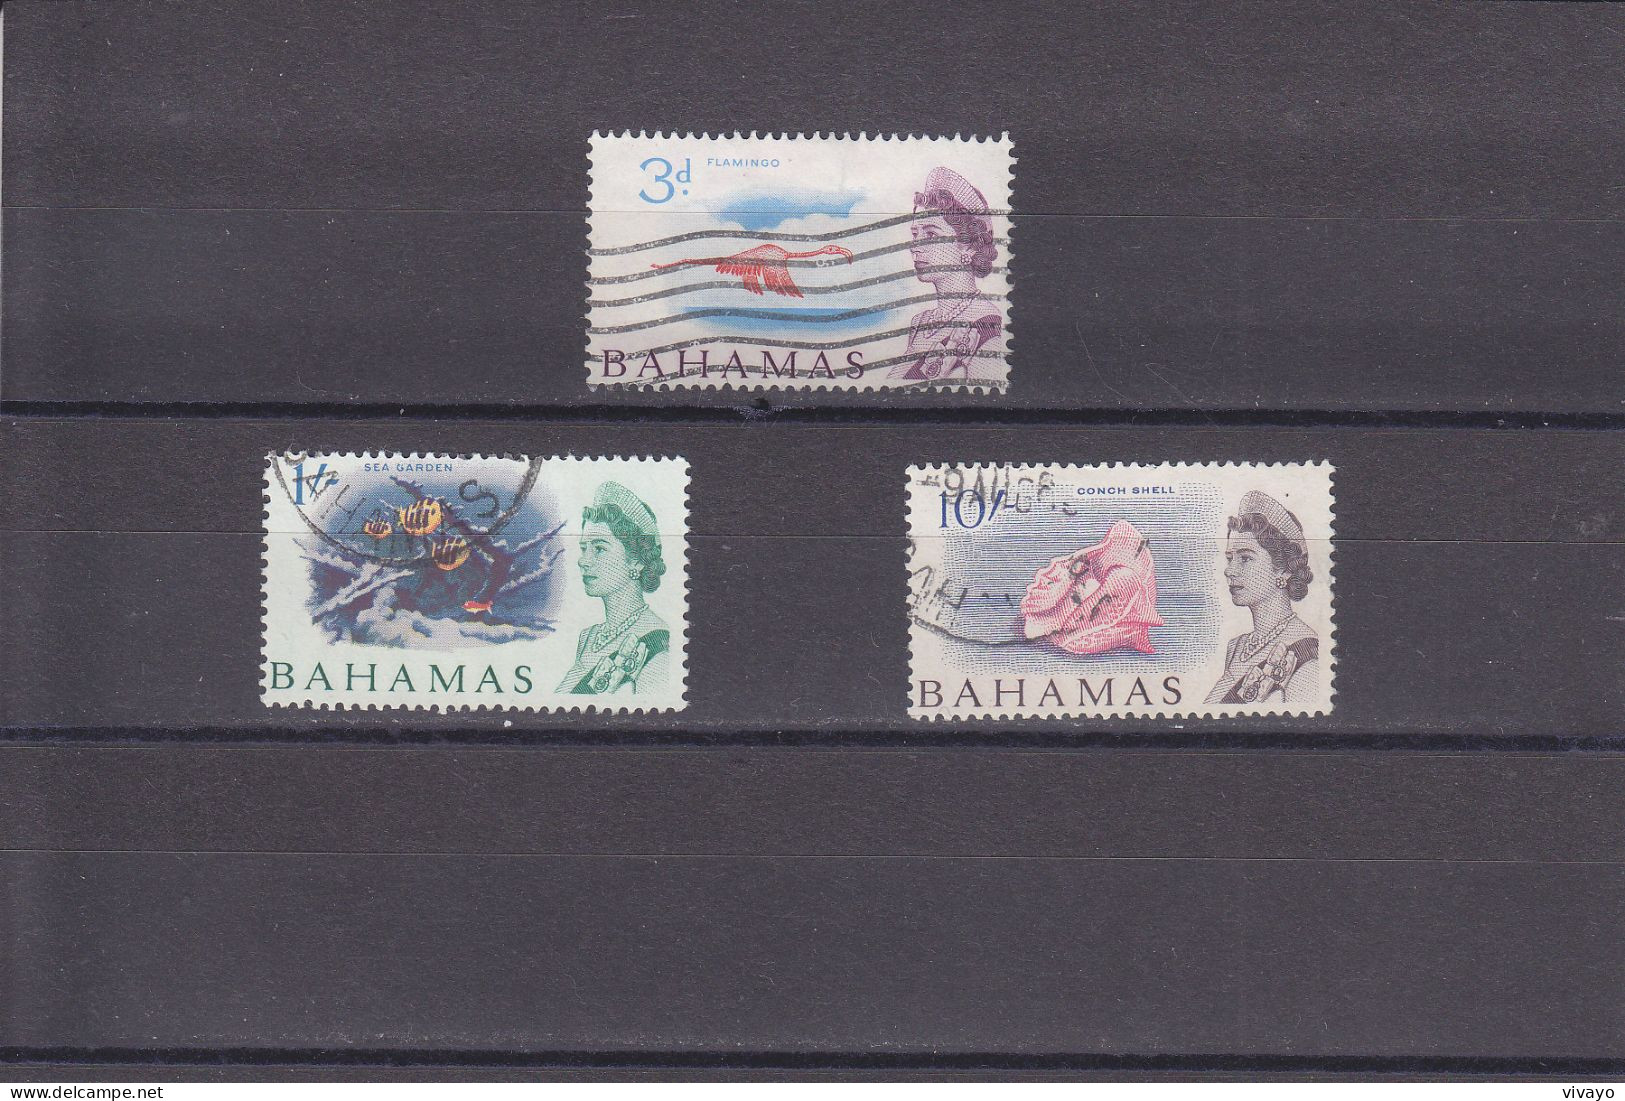 BAHAMAS - 1965 - O/FINE CANCELLED -  QEII & FLAMINGOS, SEA GARDEN, SHELL   Yv. 197, 202, 206   Mi. 213, 218, 222 - 1963-1973 Interne Autonomie